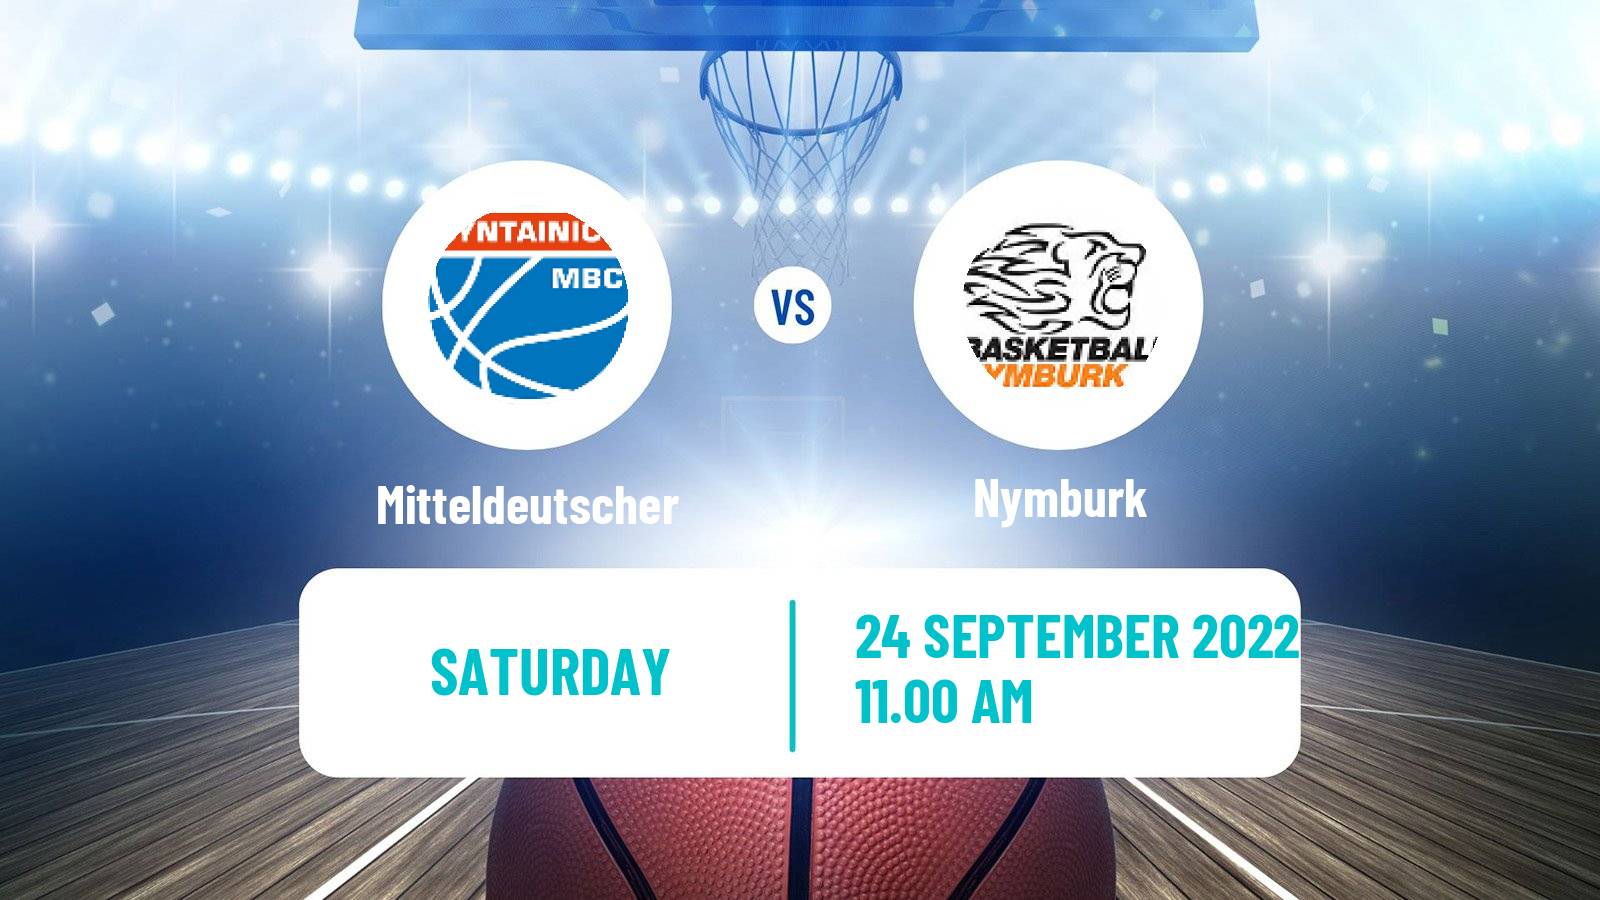 Basketball Club Friendly Basketball Mitteldeutscher - Nymburk